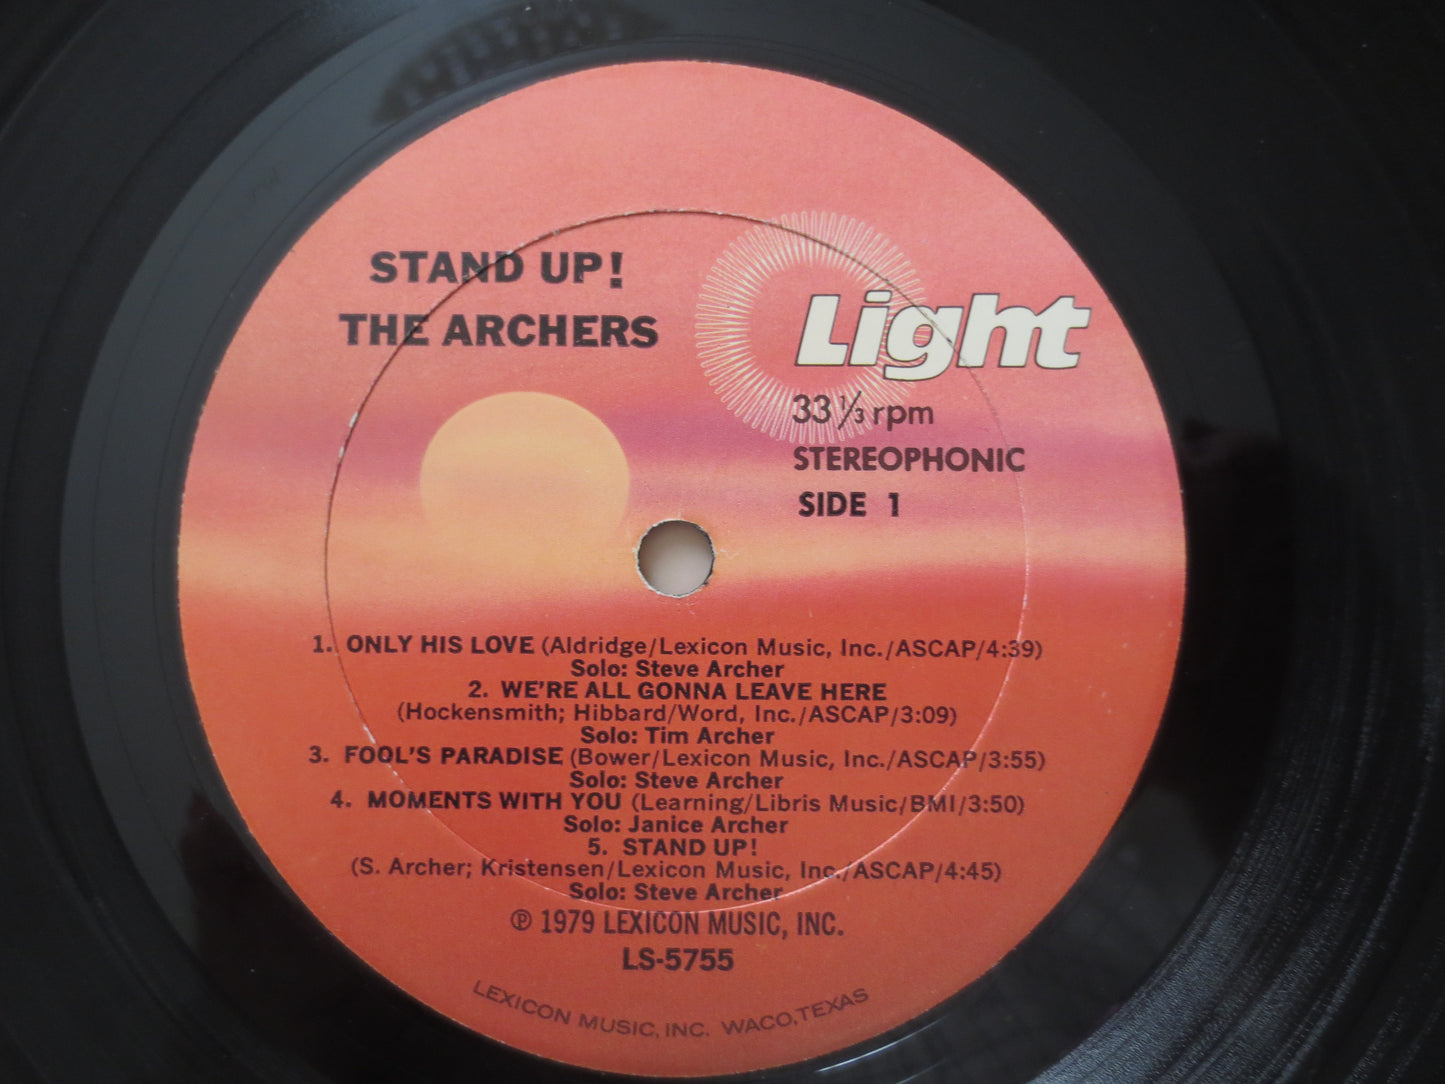 The ARCHERS, GOSPEL Album, Stand Up, The Archers Records, Vintage Vinyl, The Archers Vinyl, The Archers Album, 1979 Records